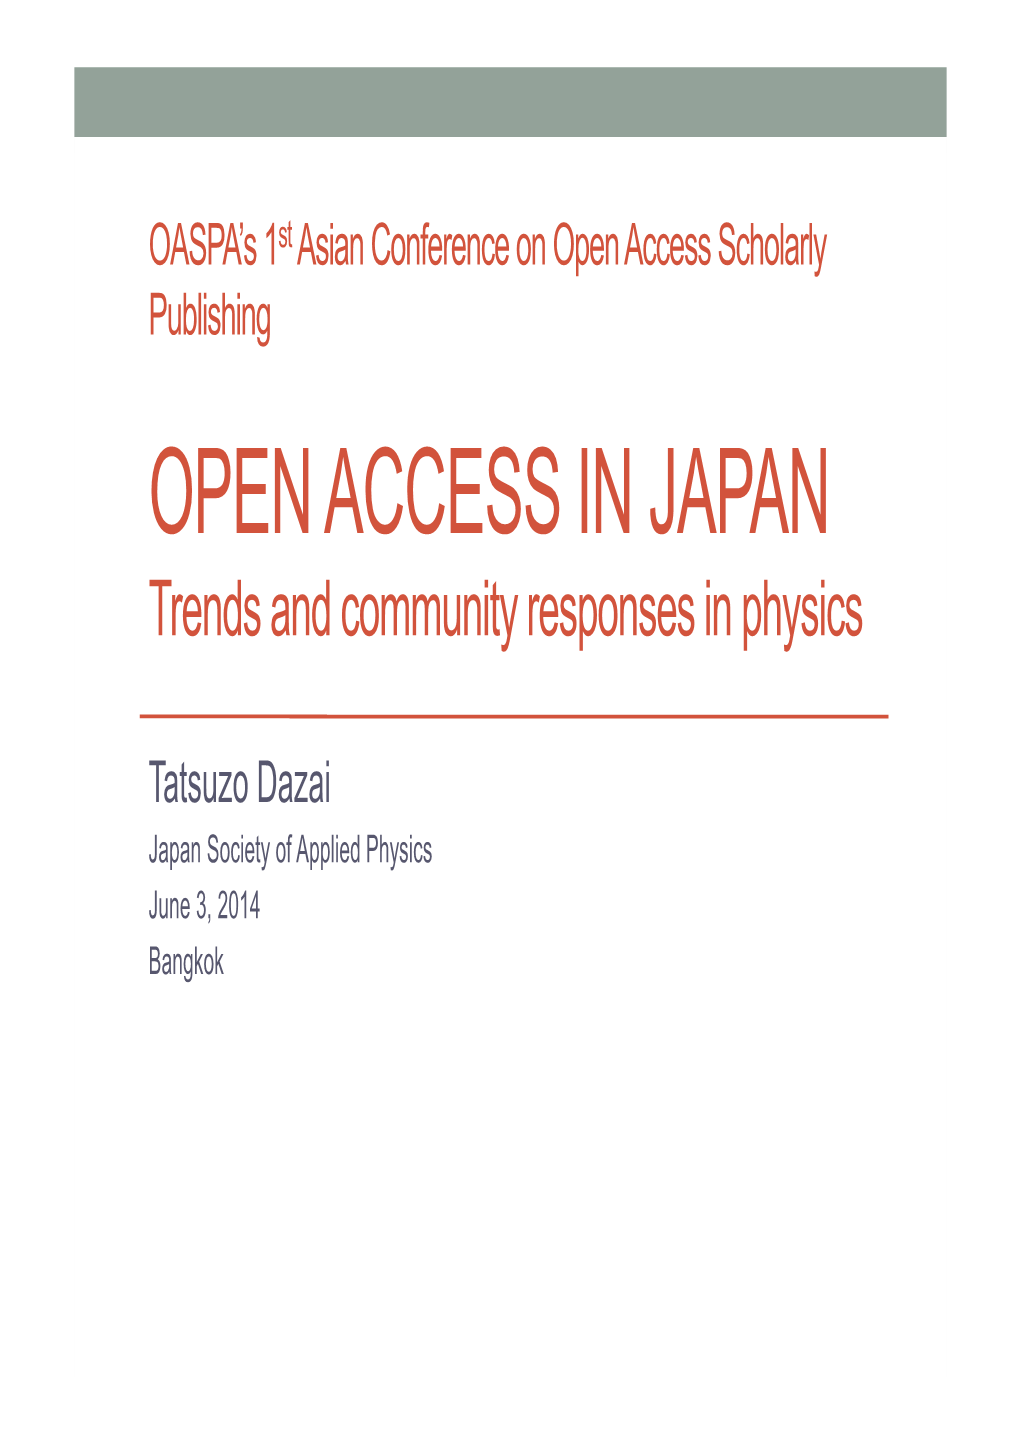 Tatsuzo Dazai Japan Society of Applied Physics June 3, 2014 Bangkok 2